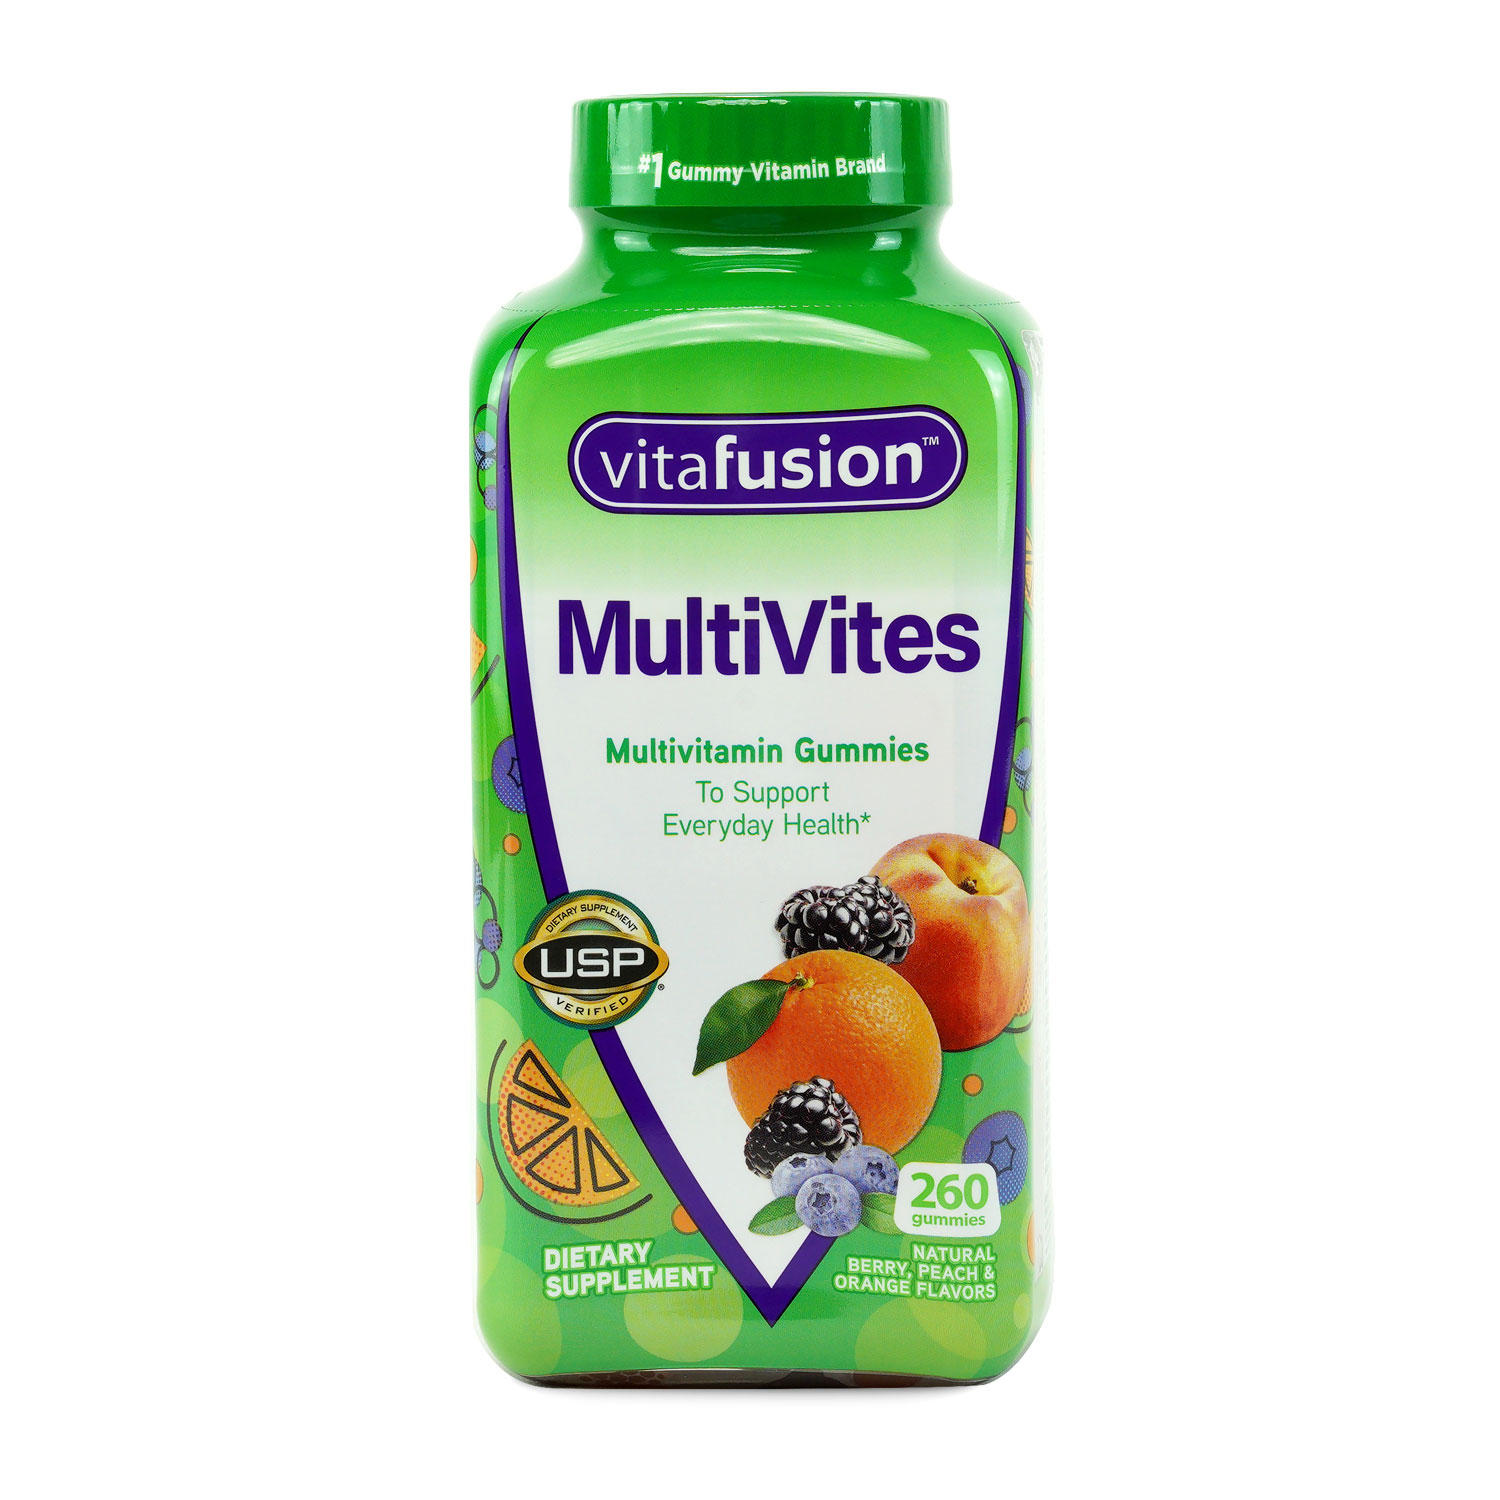 Vitafusion MultiVites Essential Multivitamin Natural Berry, Peach and Orange Flavor 260 ct.